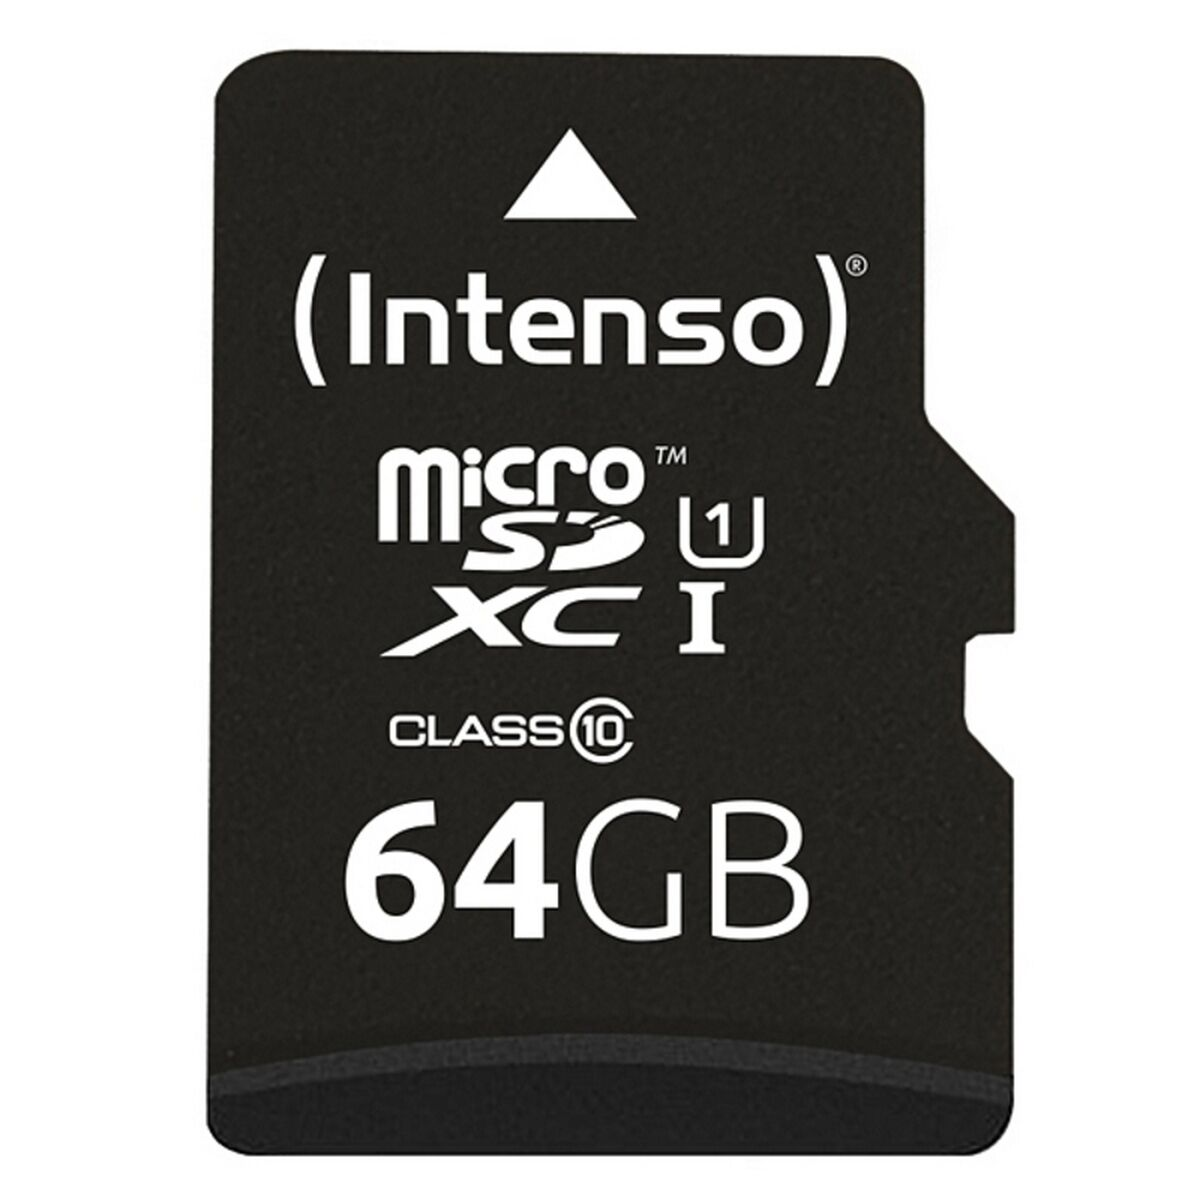 INTENSO 3423491 MICRO GB, 128GB UHS-1 Micro-SDXC MB/s Speicherkarte, 45 PREMIUM, SDXC 128